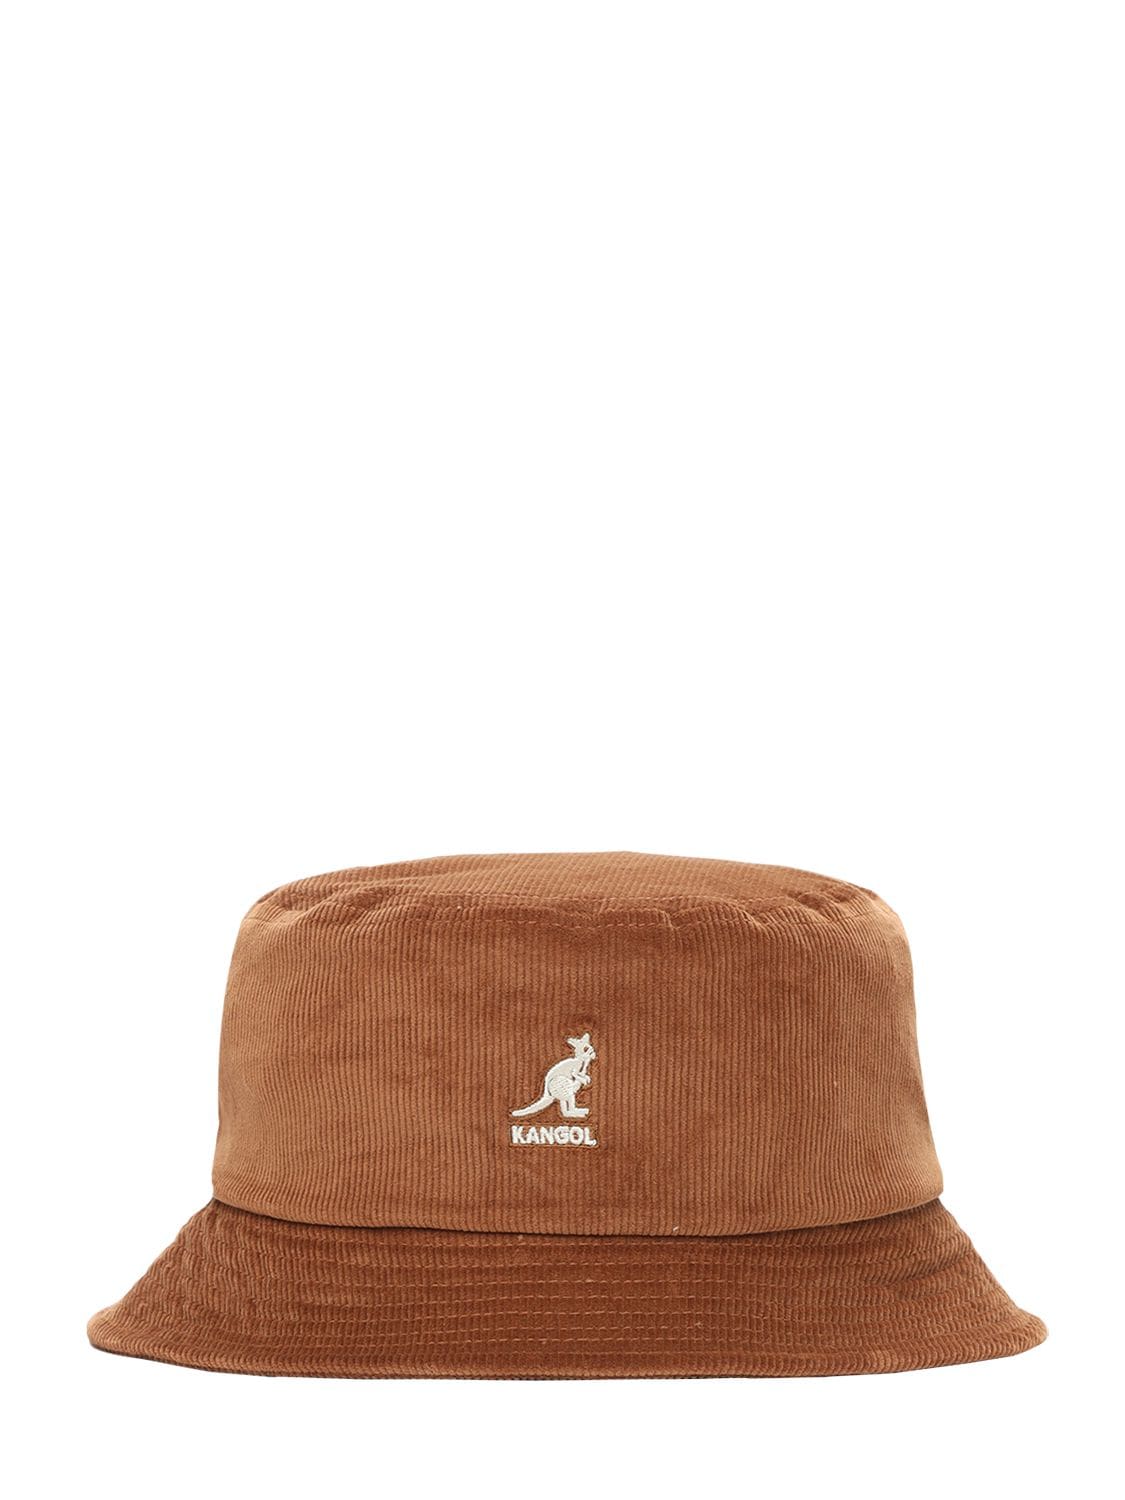 Kangol Corduroy Bucket Hat In Brown